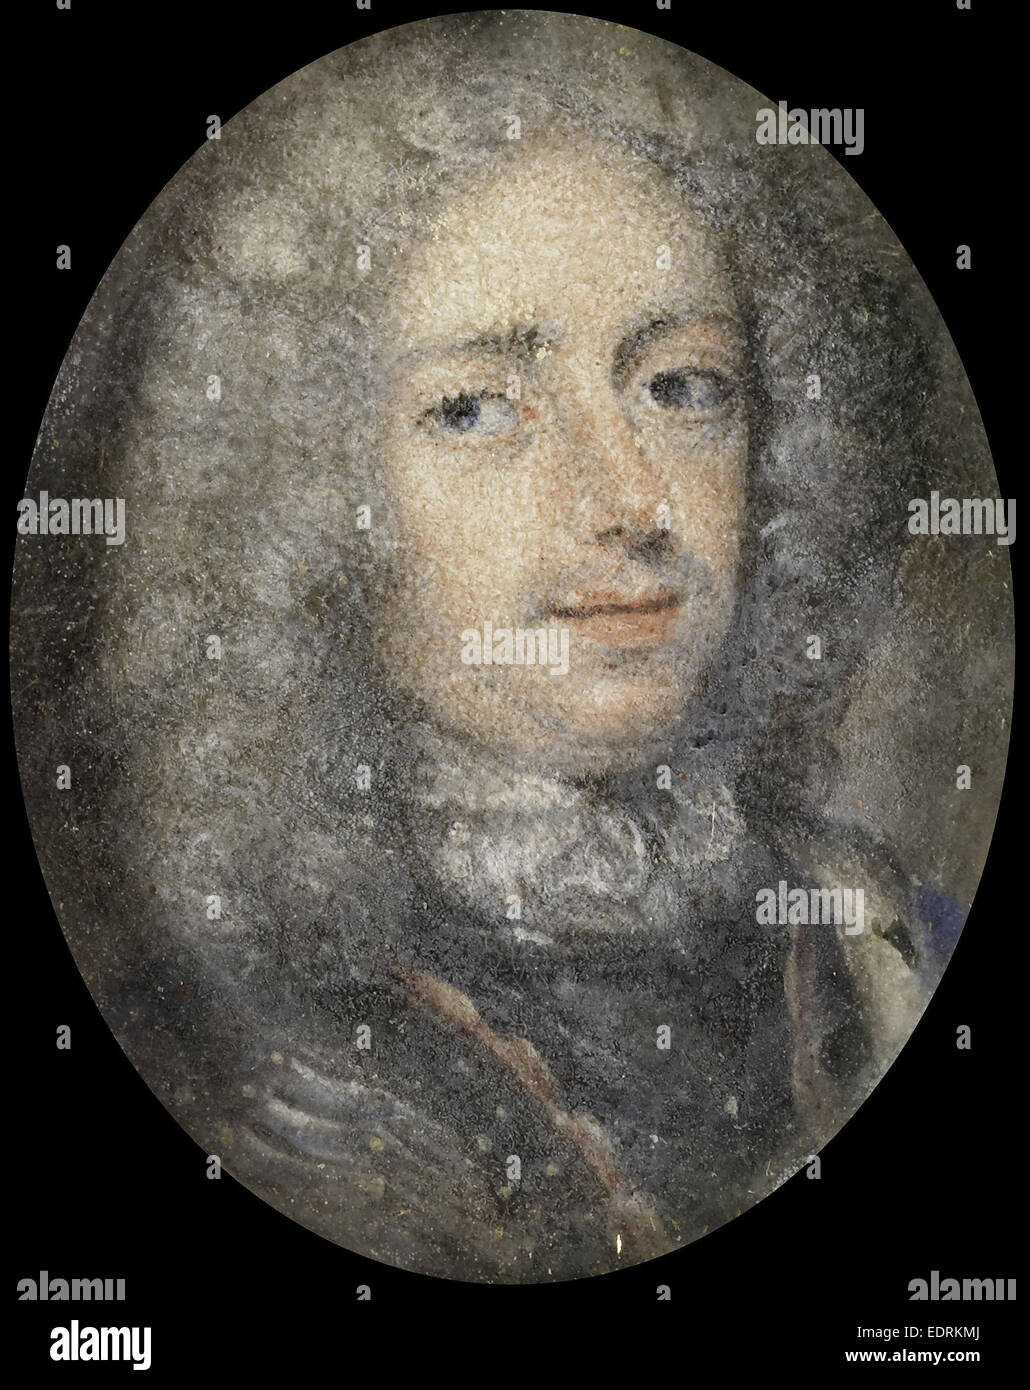 Download preview image - johan-willem-friso-1687-1711-prince-of-orange-nassau-anonymous-c-1710-EDRKMJ